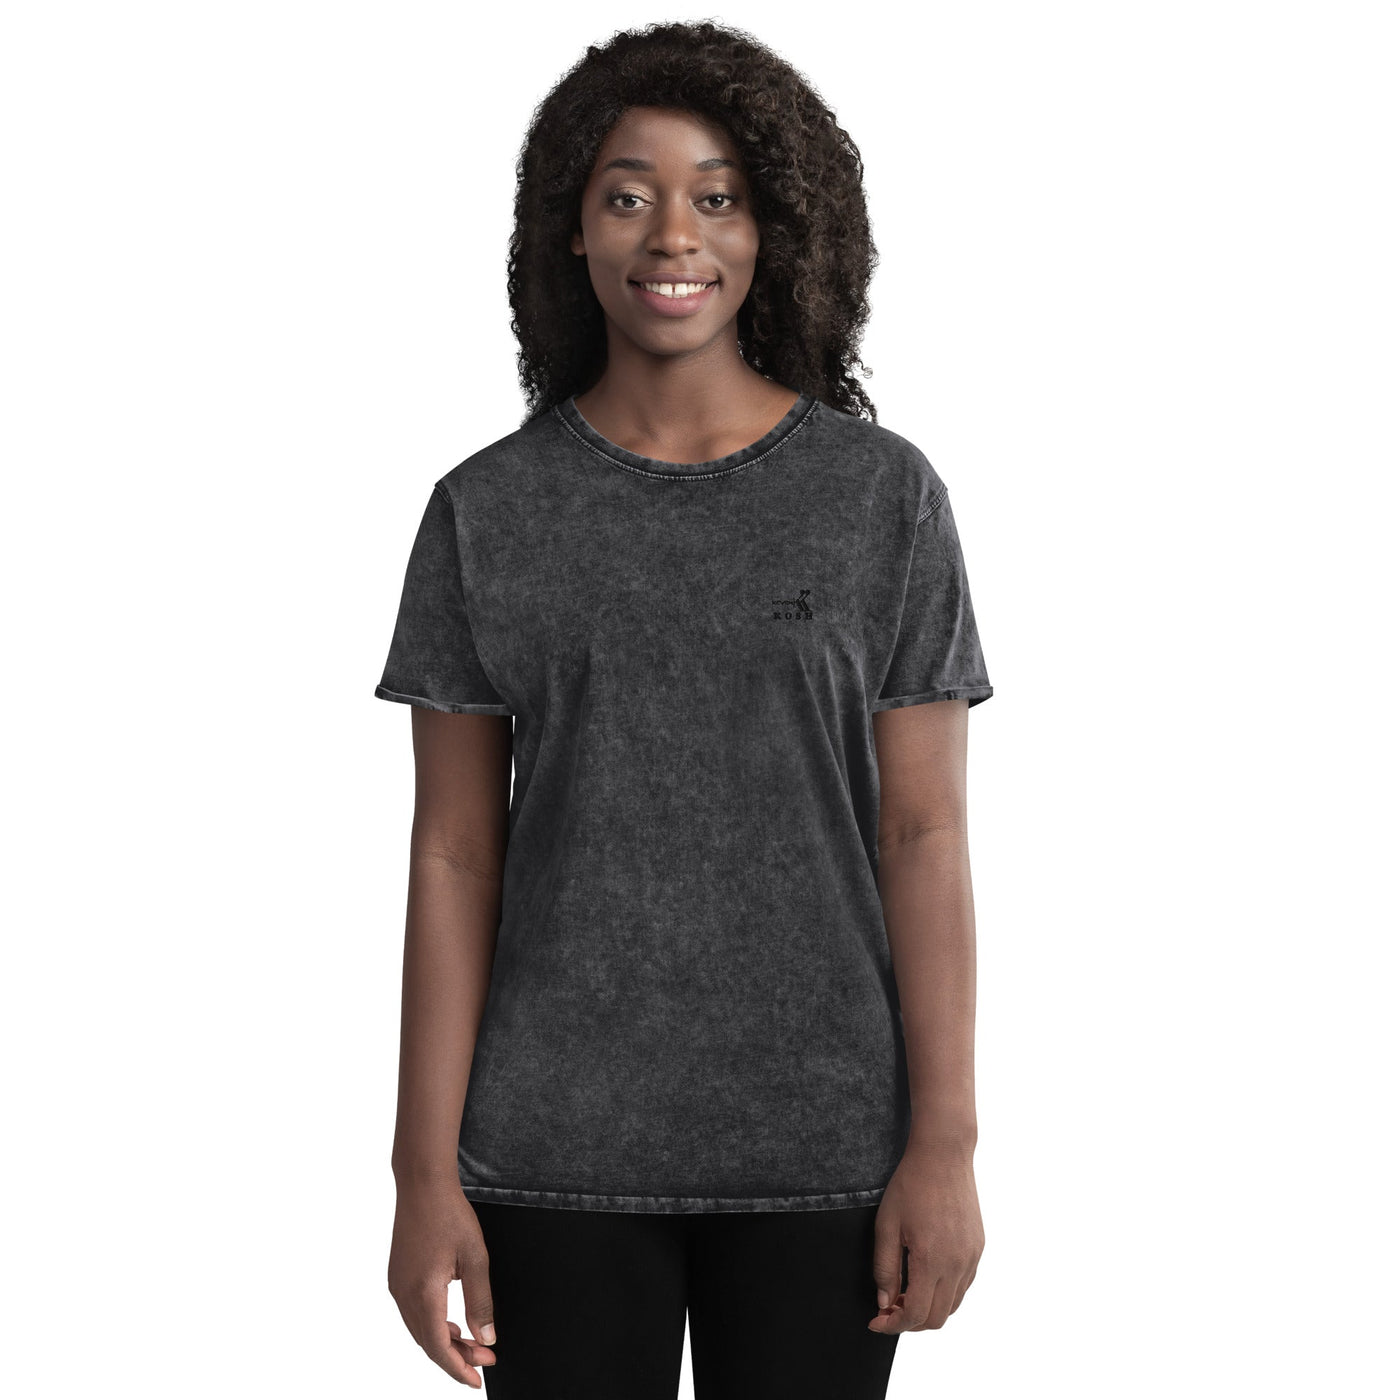 KevenKosh ® Denim T-Shirt Women KevenKosh Black S 